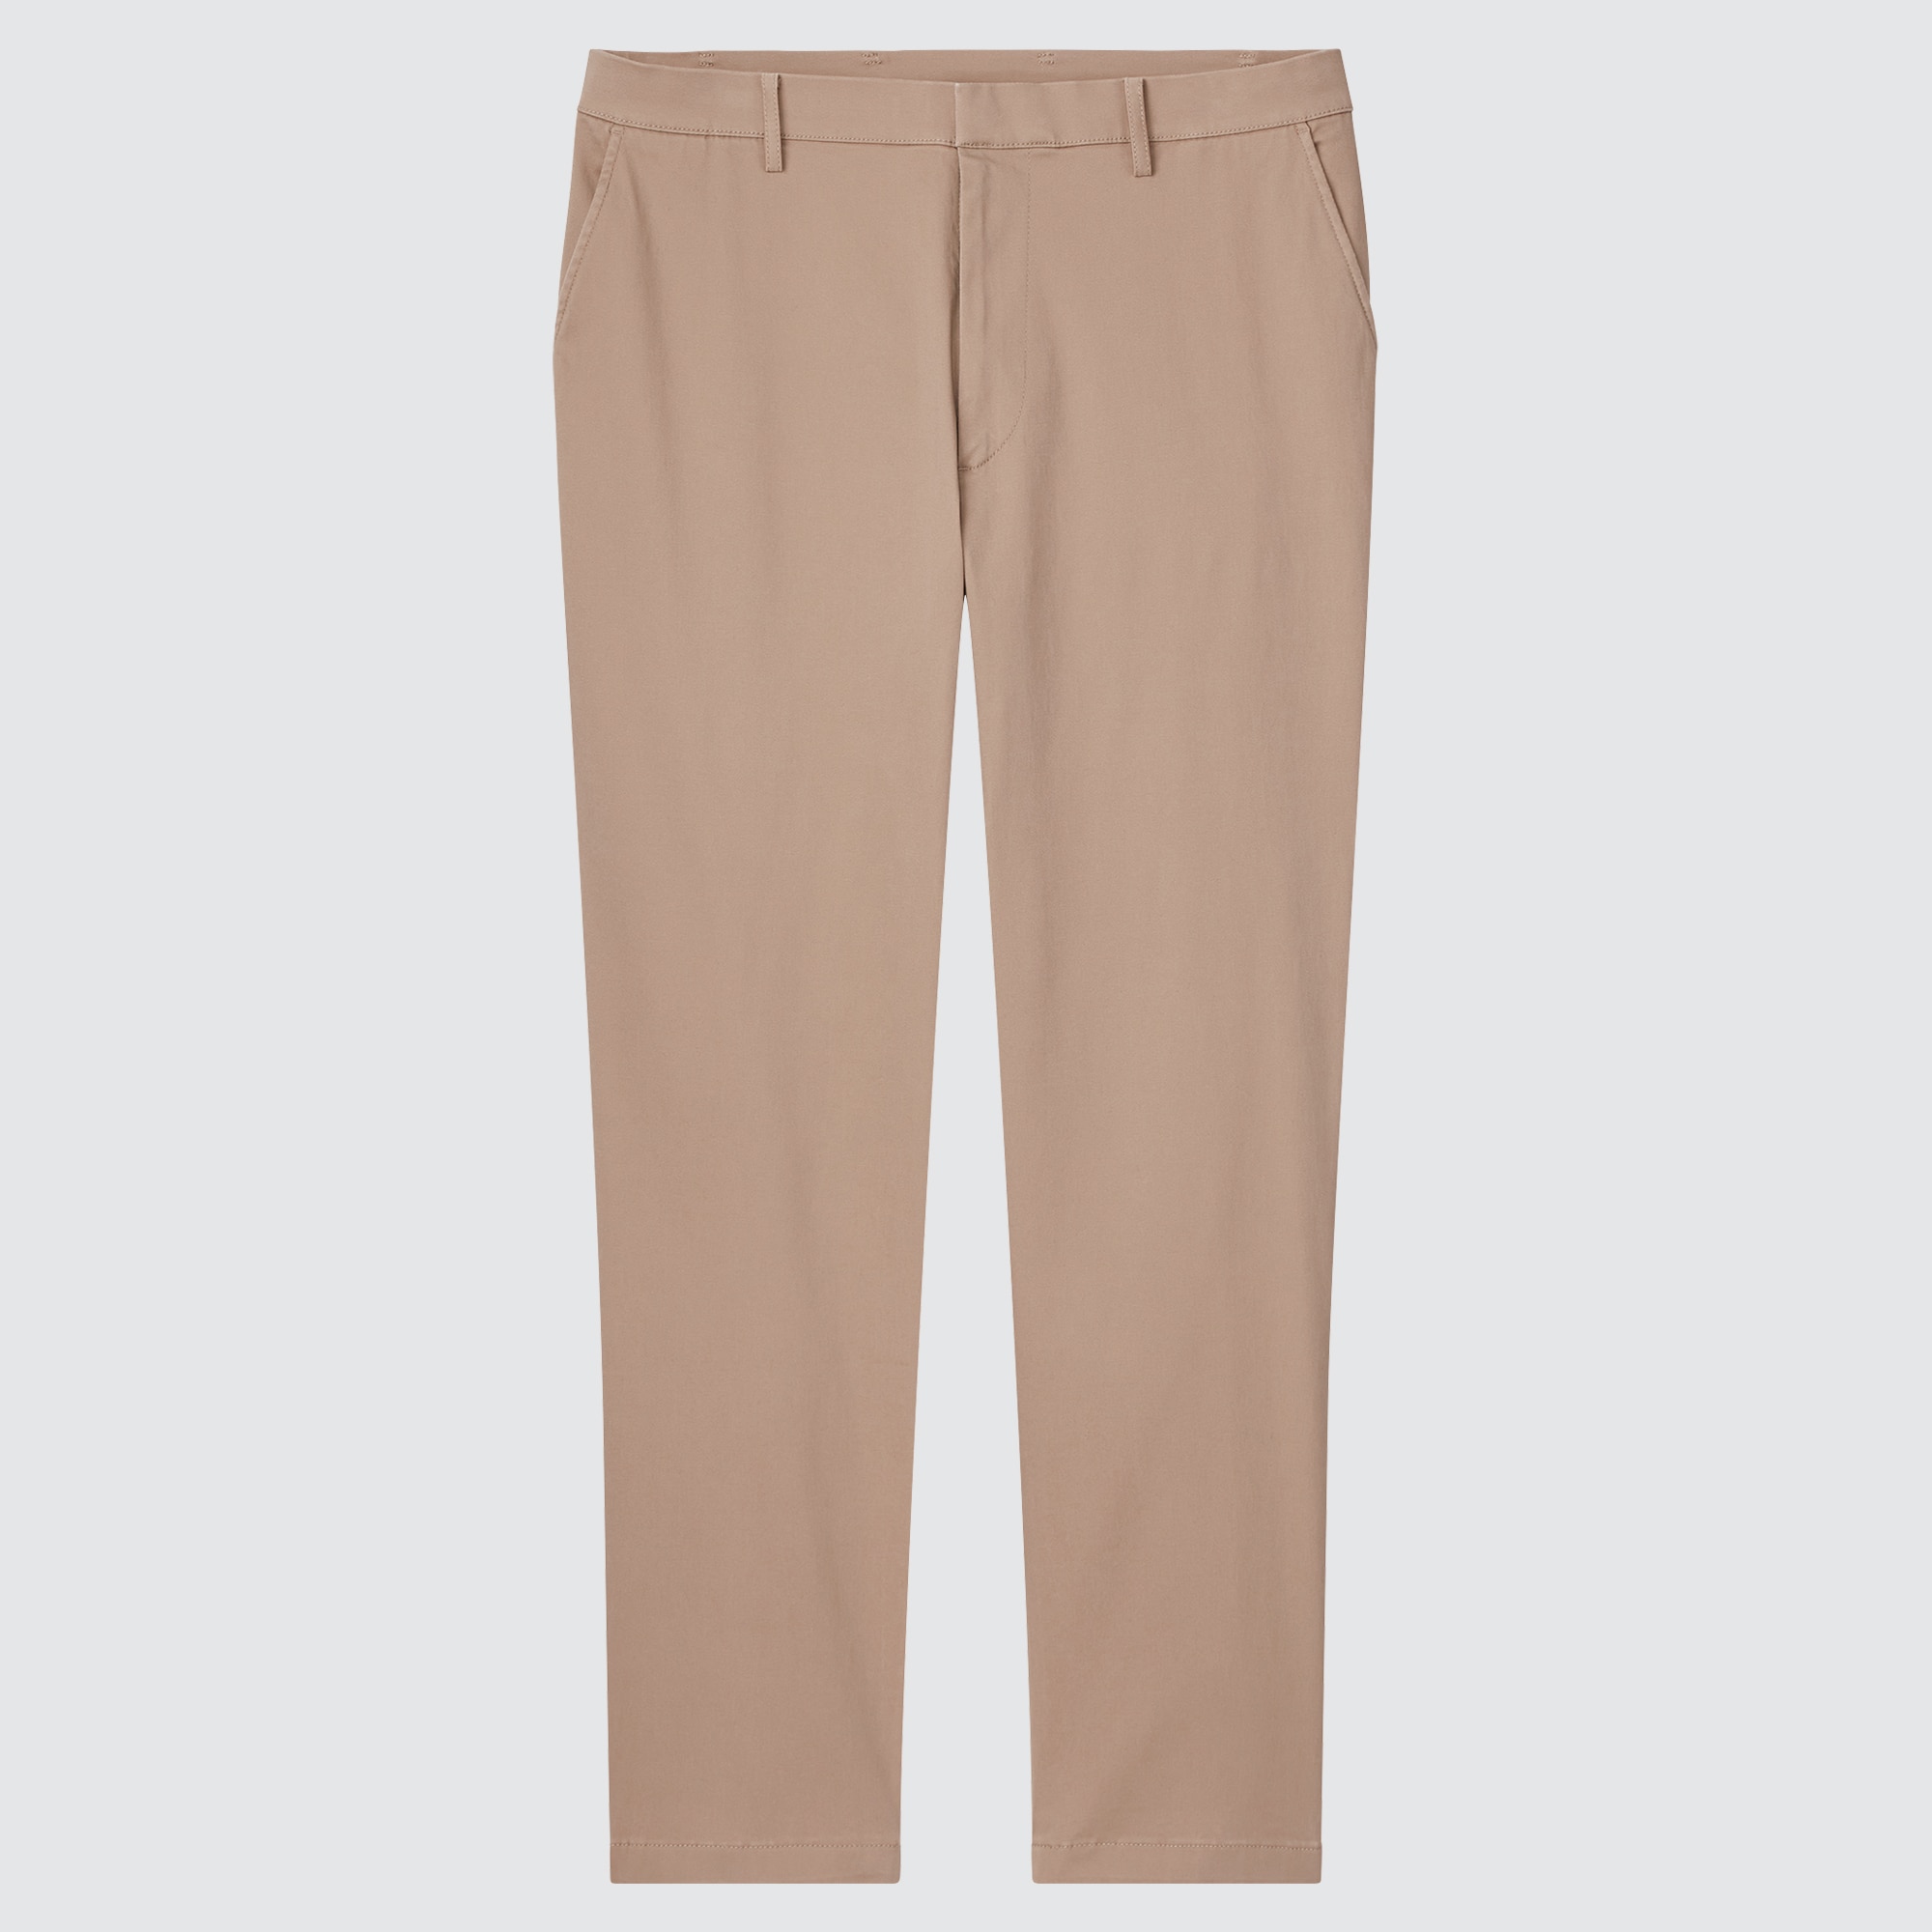 Springfield slacks discount 97% Beige XL MEN FASHION Trousers Elegant 